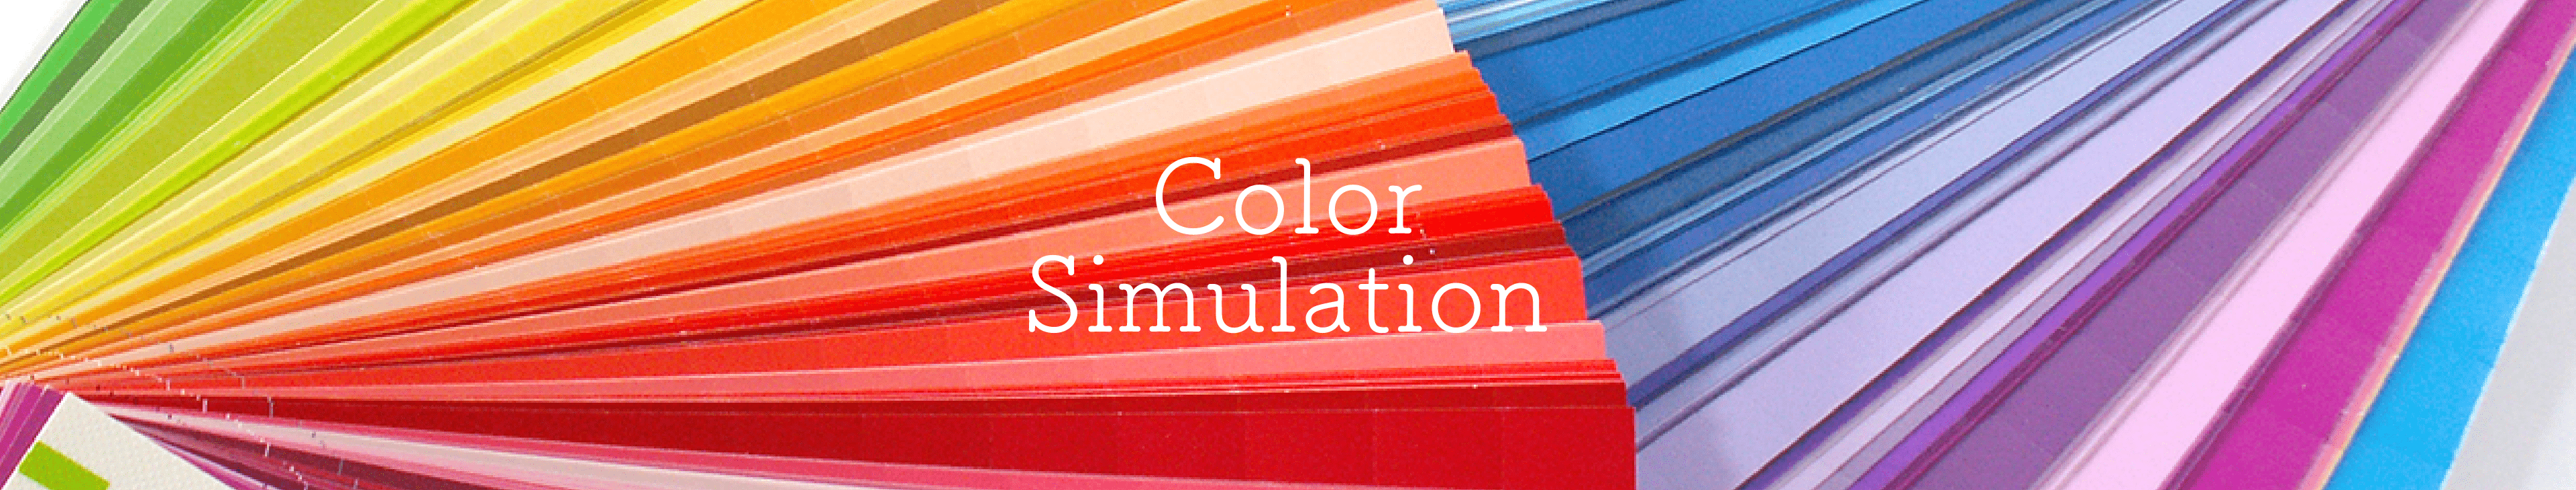 Color Simulation